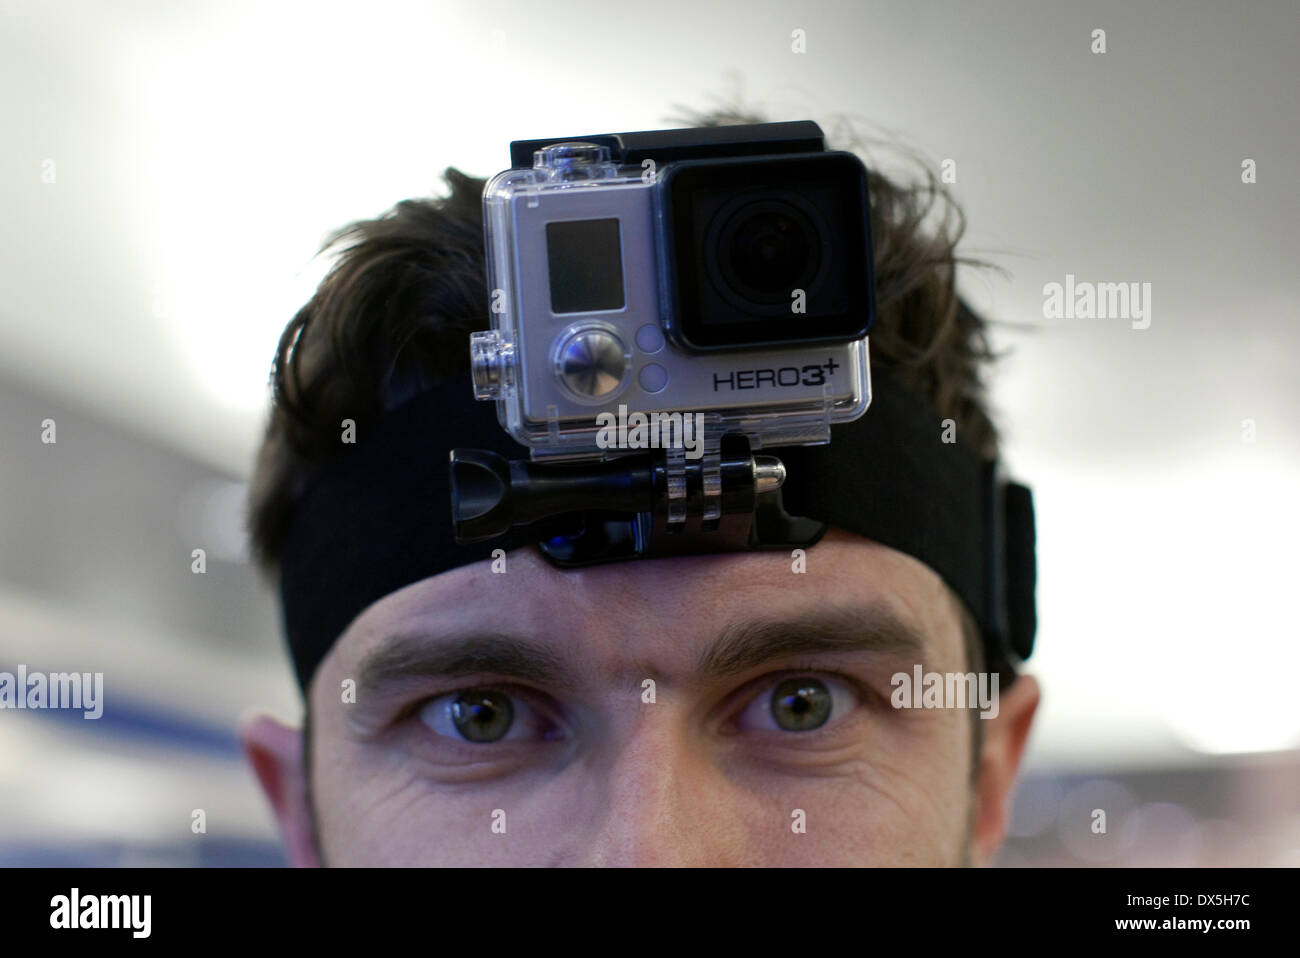 Wearable Technology Show, Olympia, Londra GoPro Hero 3 + telecamera indossabile sulla fascetta Foto Stock